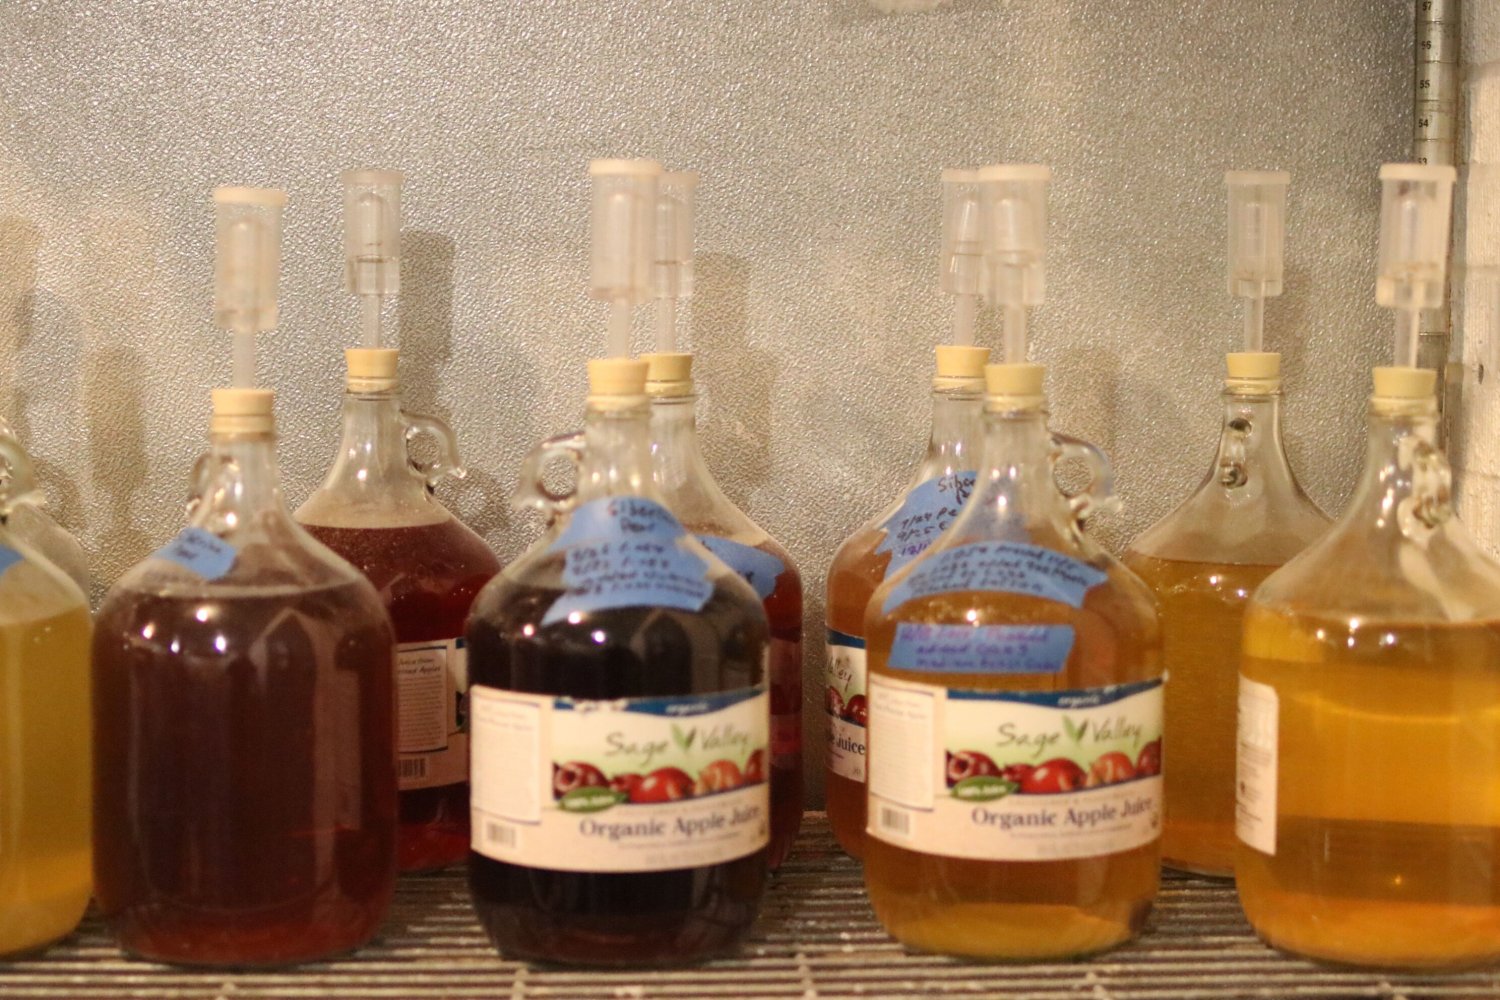 Honeycrisp Bushel Box - Klein's Kill Fruit Farms